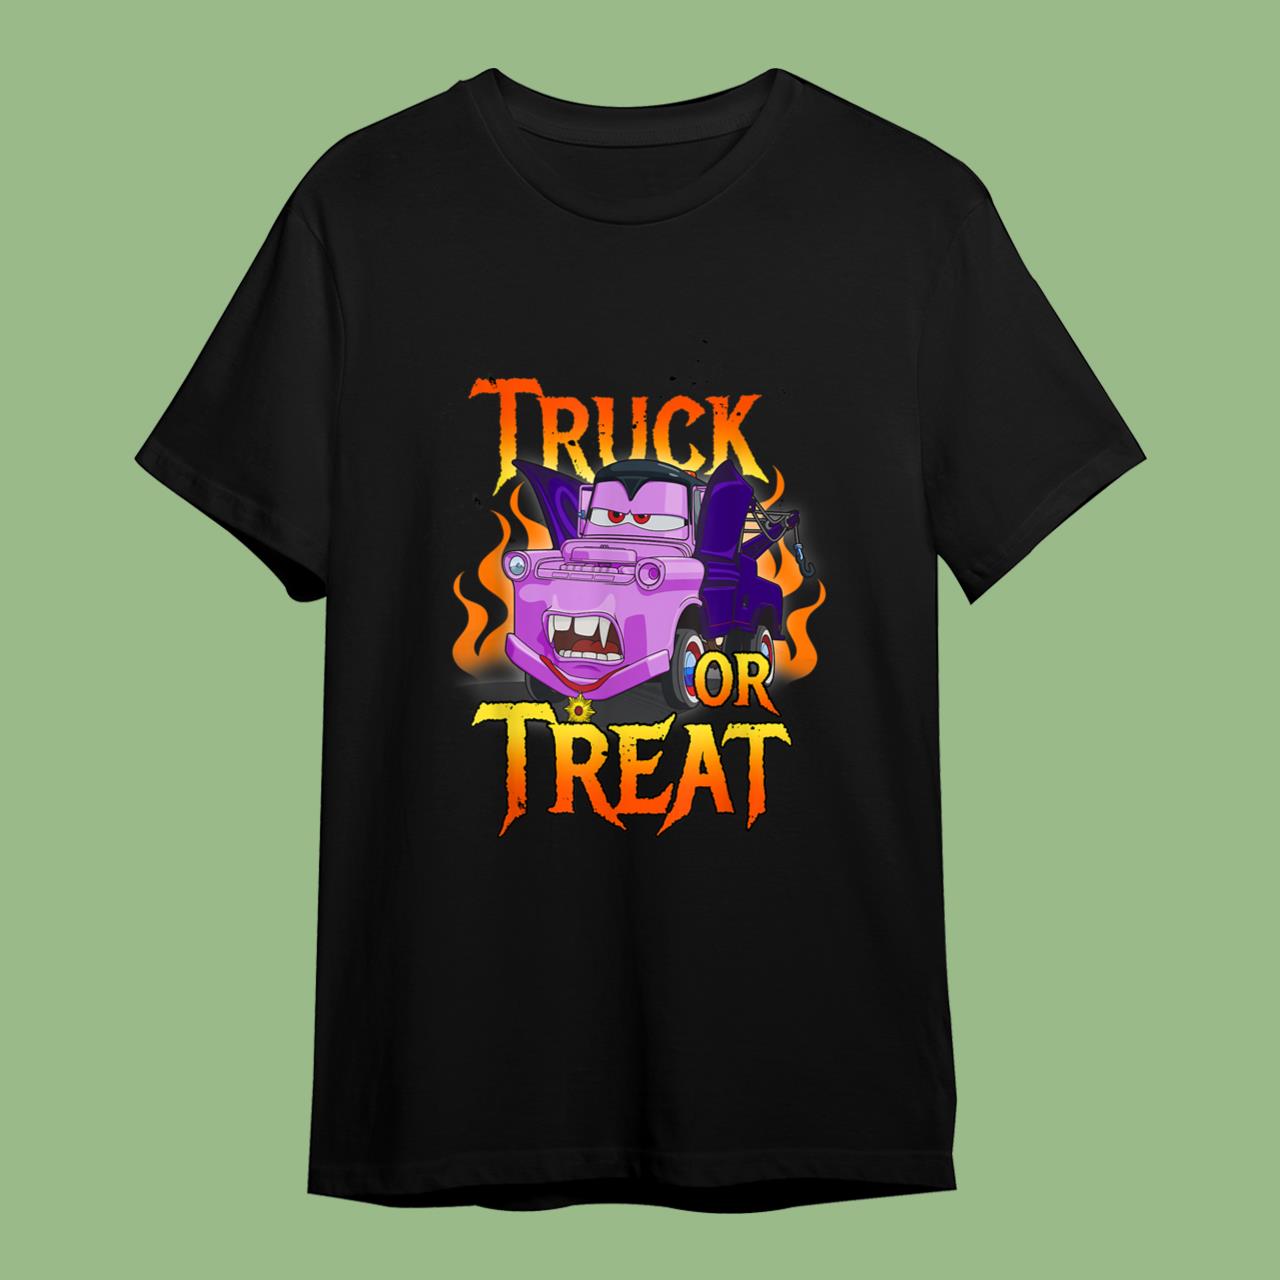 Disney Pixar Cars Halloween Vampire Truck Or Treat T-Shirt